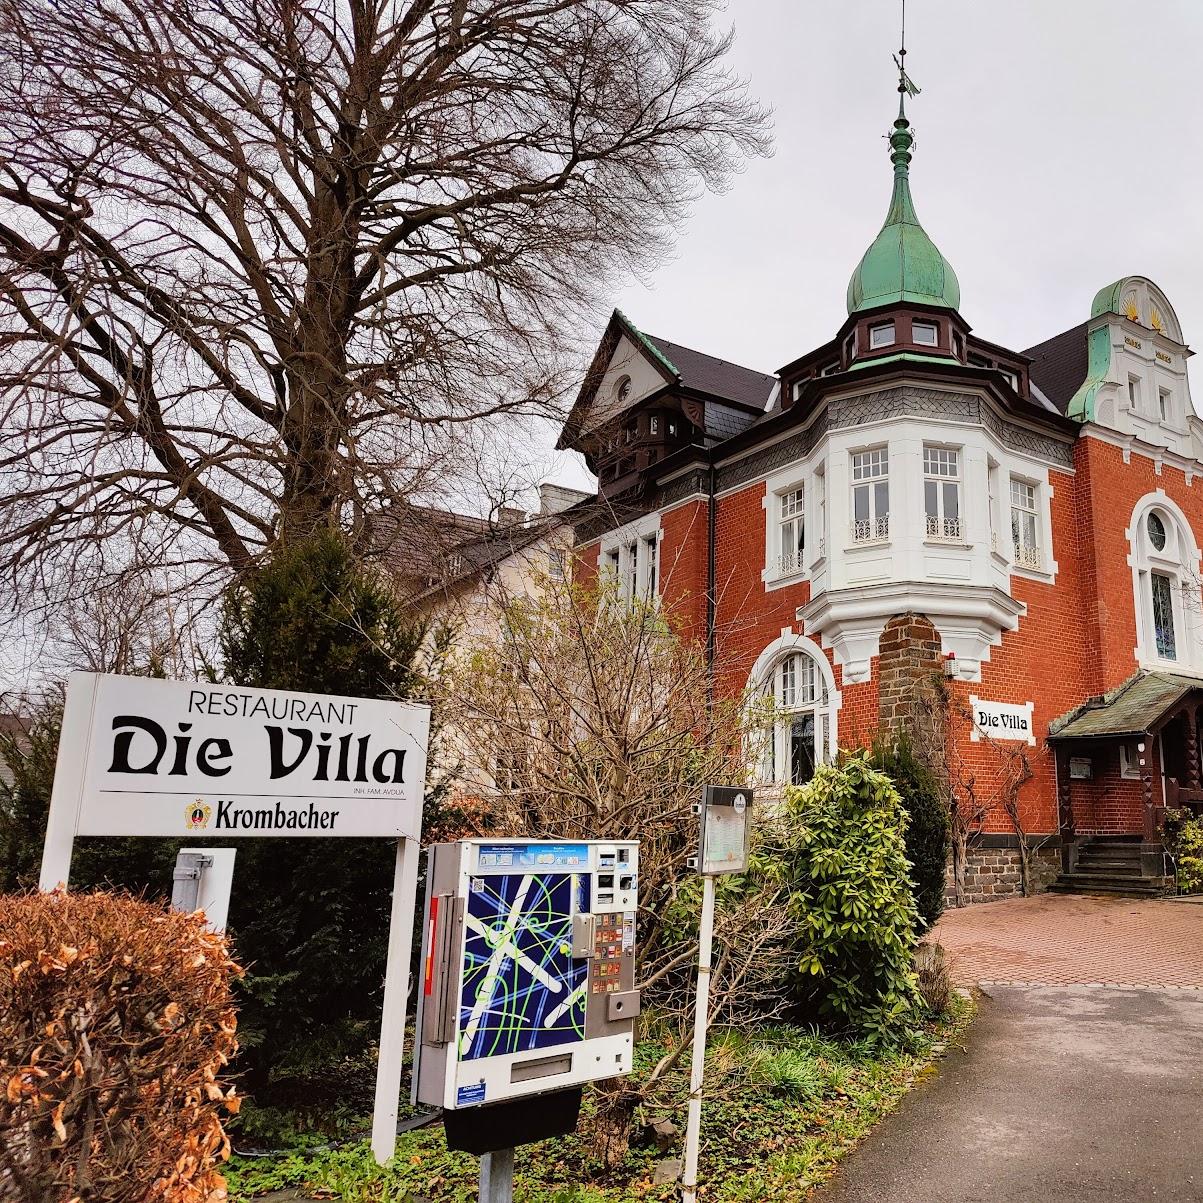 Restaurant "Die Villa" in Olpe